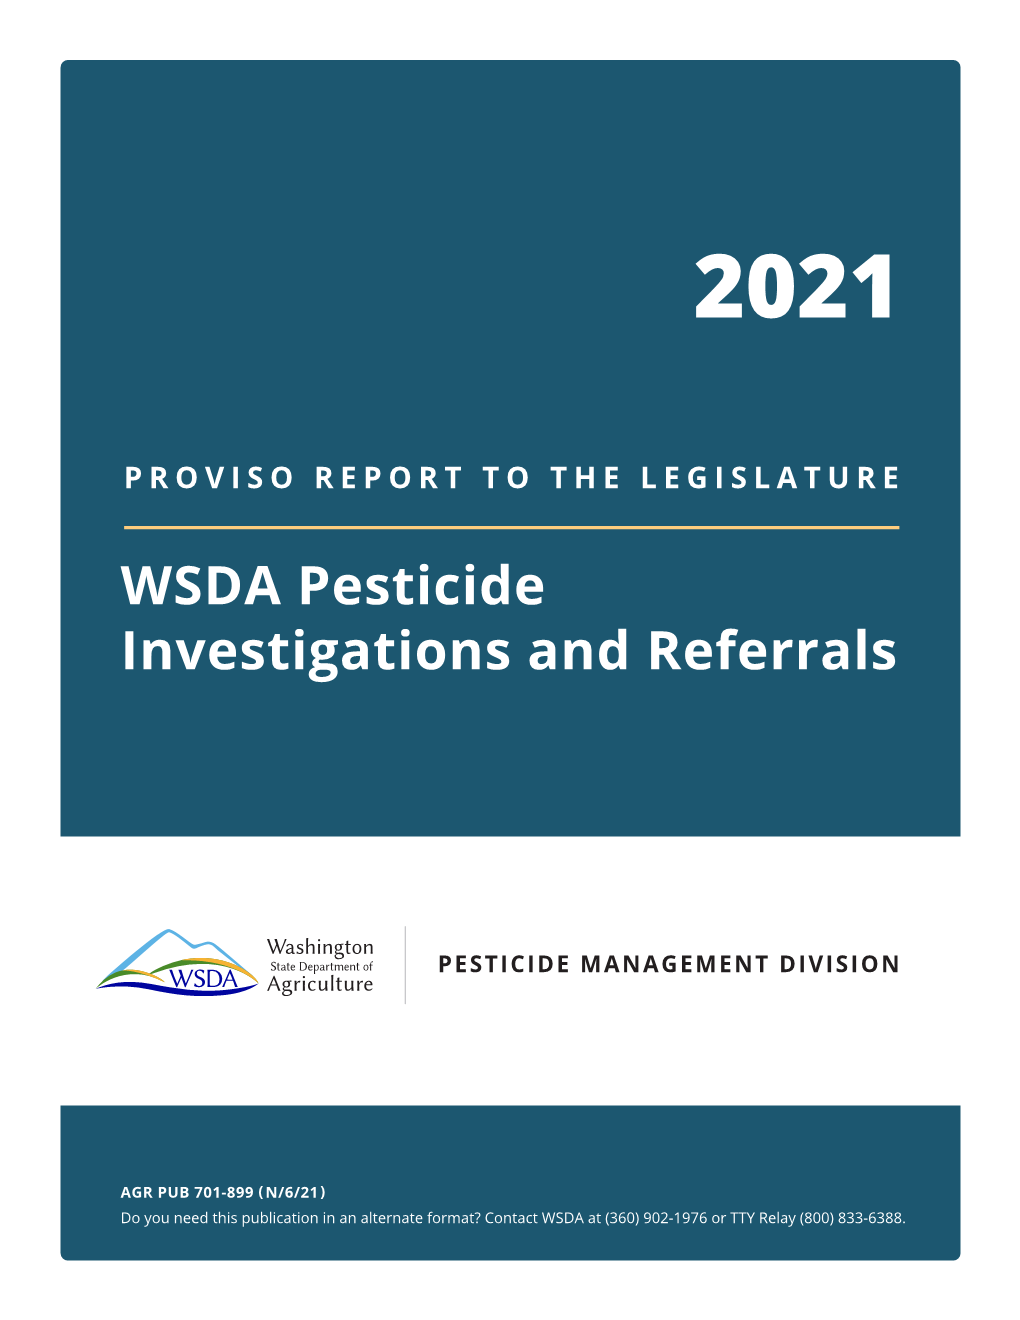 2021 Proviso Report: WSDA Pesticide Investigations and Referrals